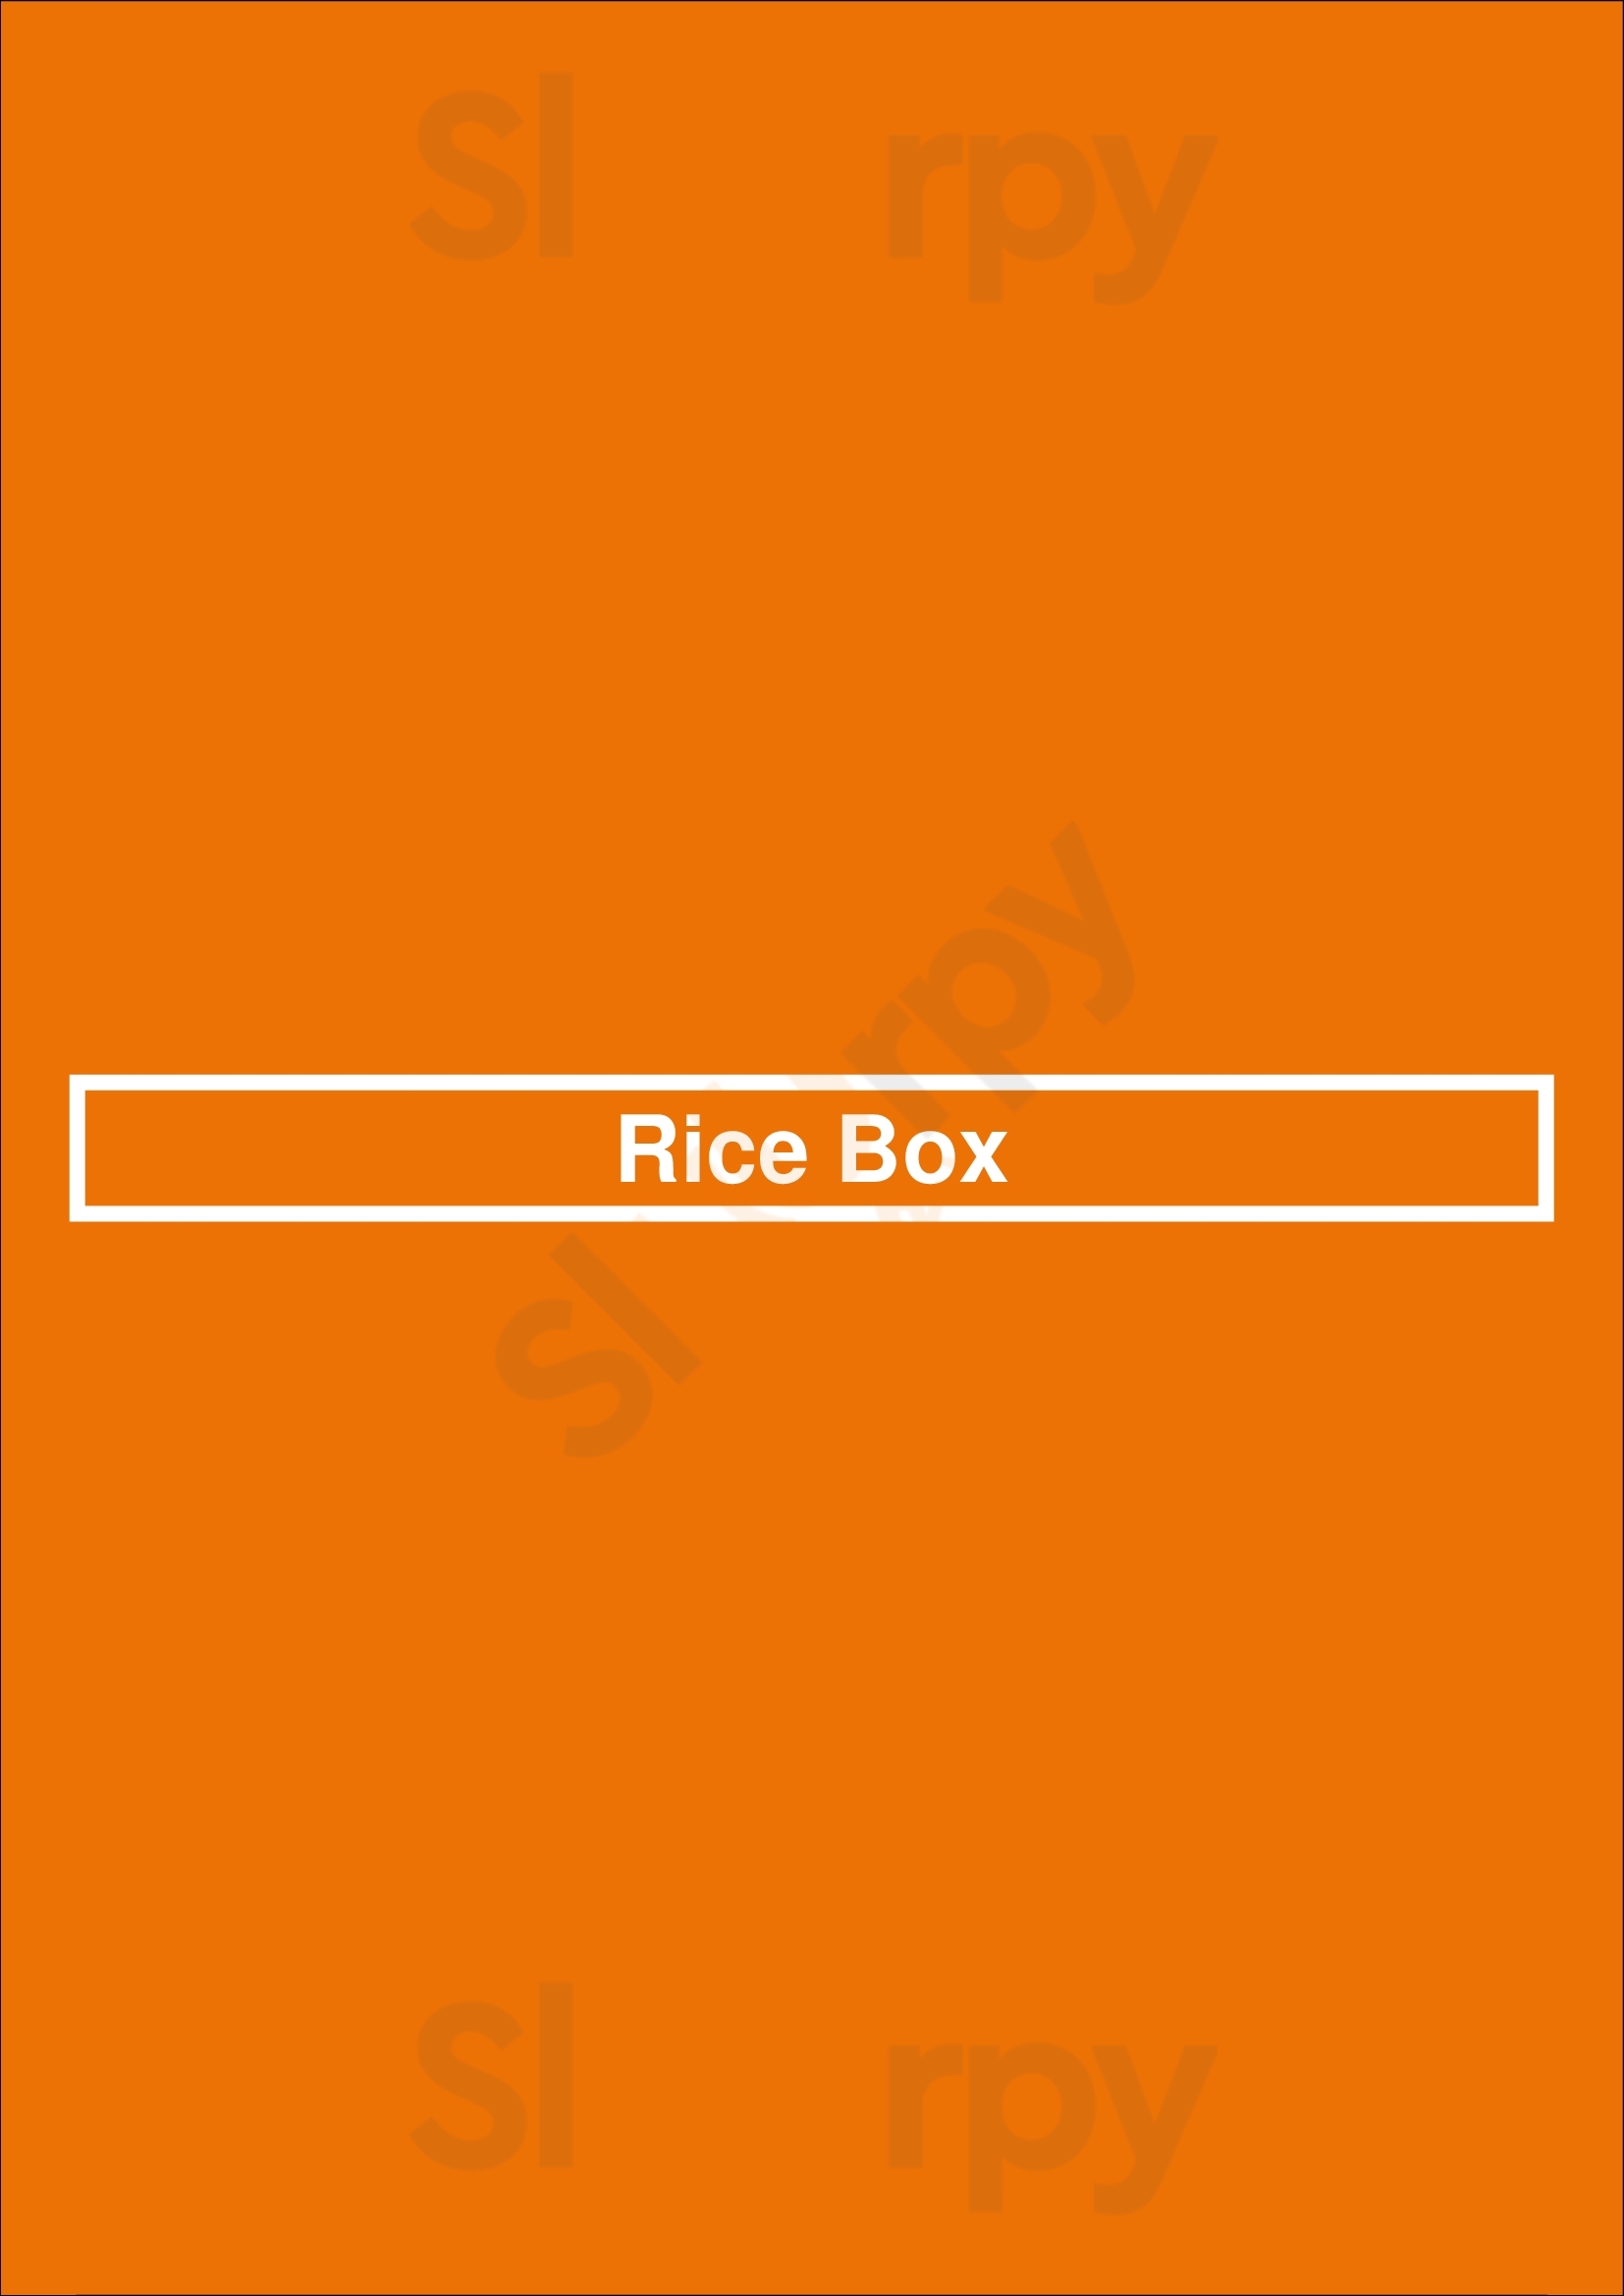 Rice Box Oxford Menu - 1